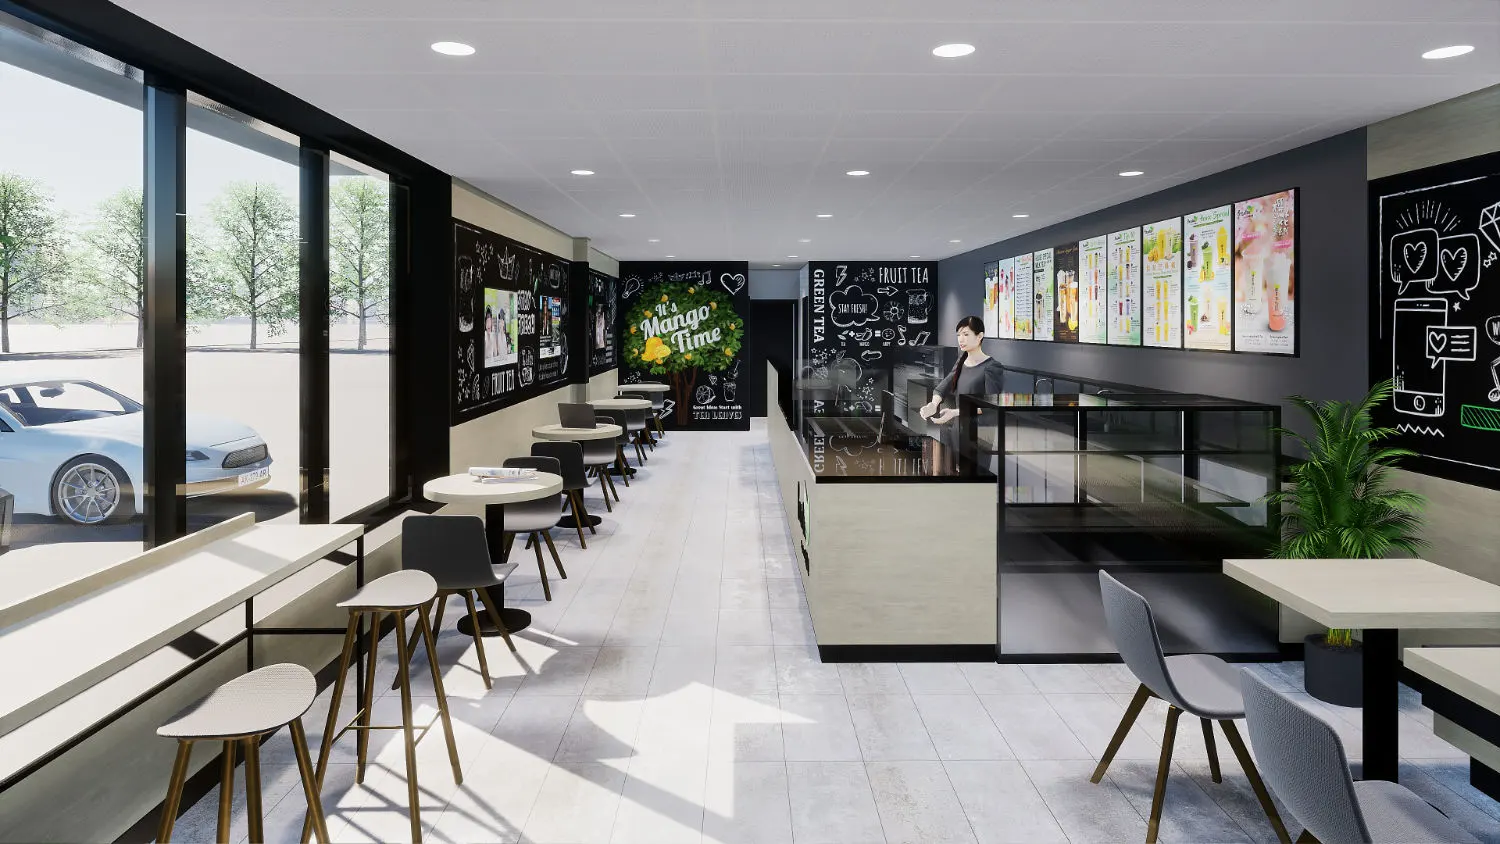 Interior design project for Presotea 鮮茶道. Designed the cafe wallpaper design